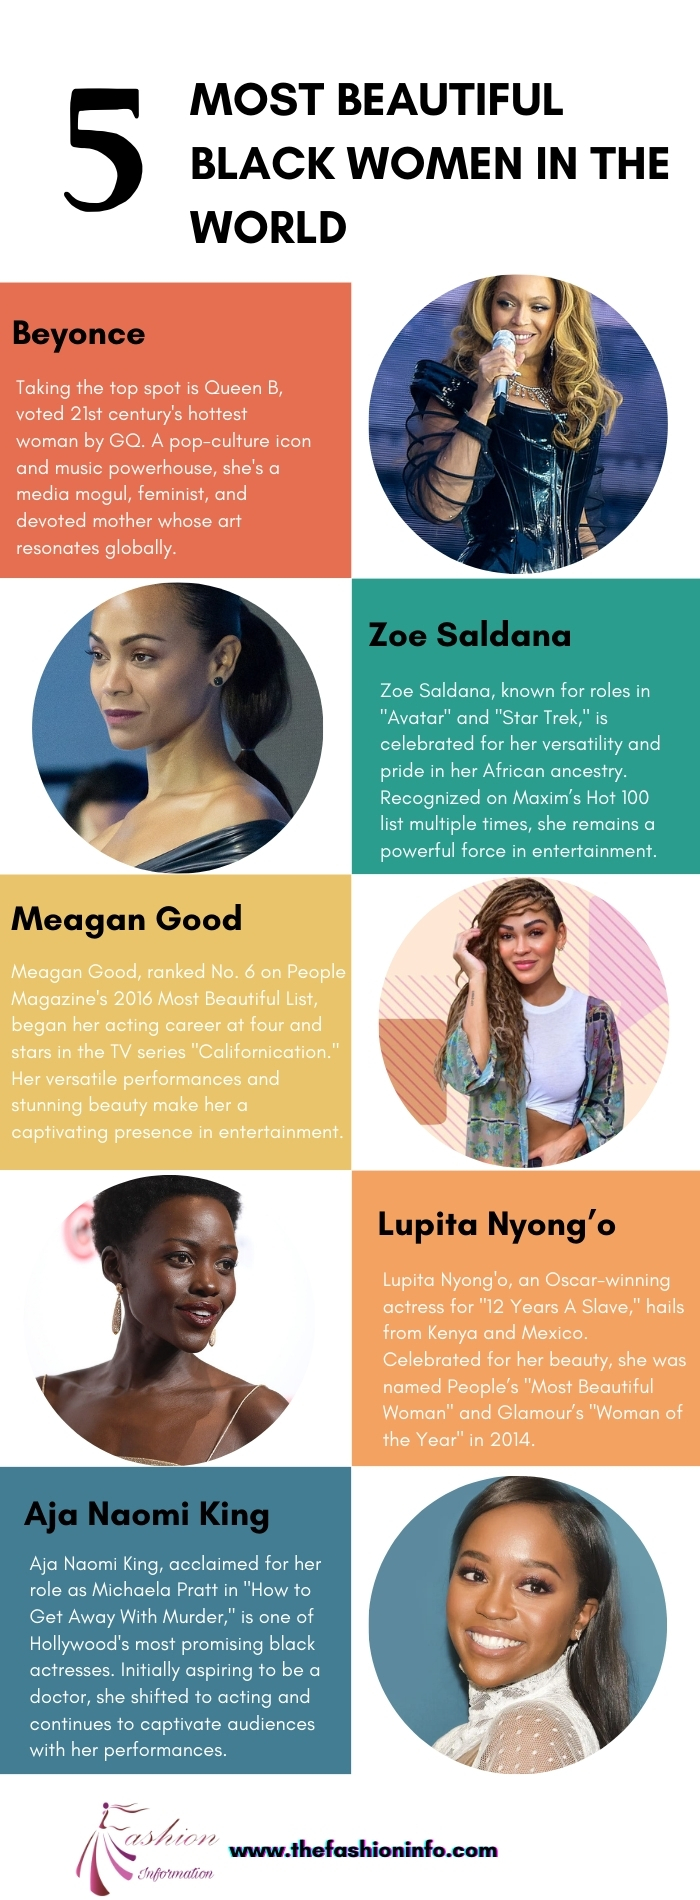 5 Most Beautiful Black Women in the World